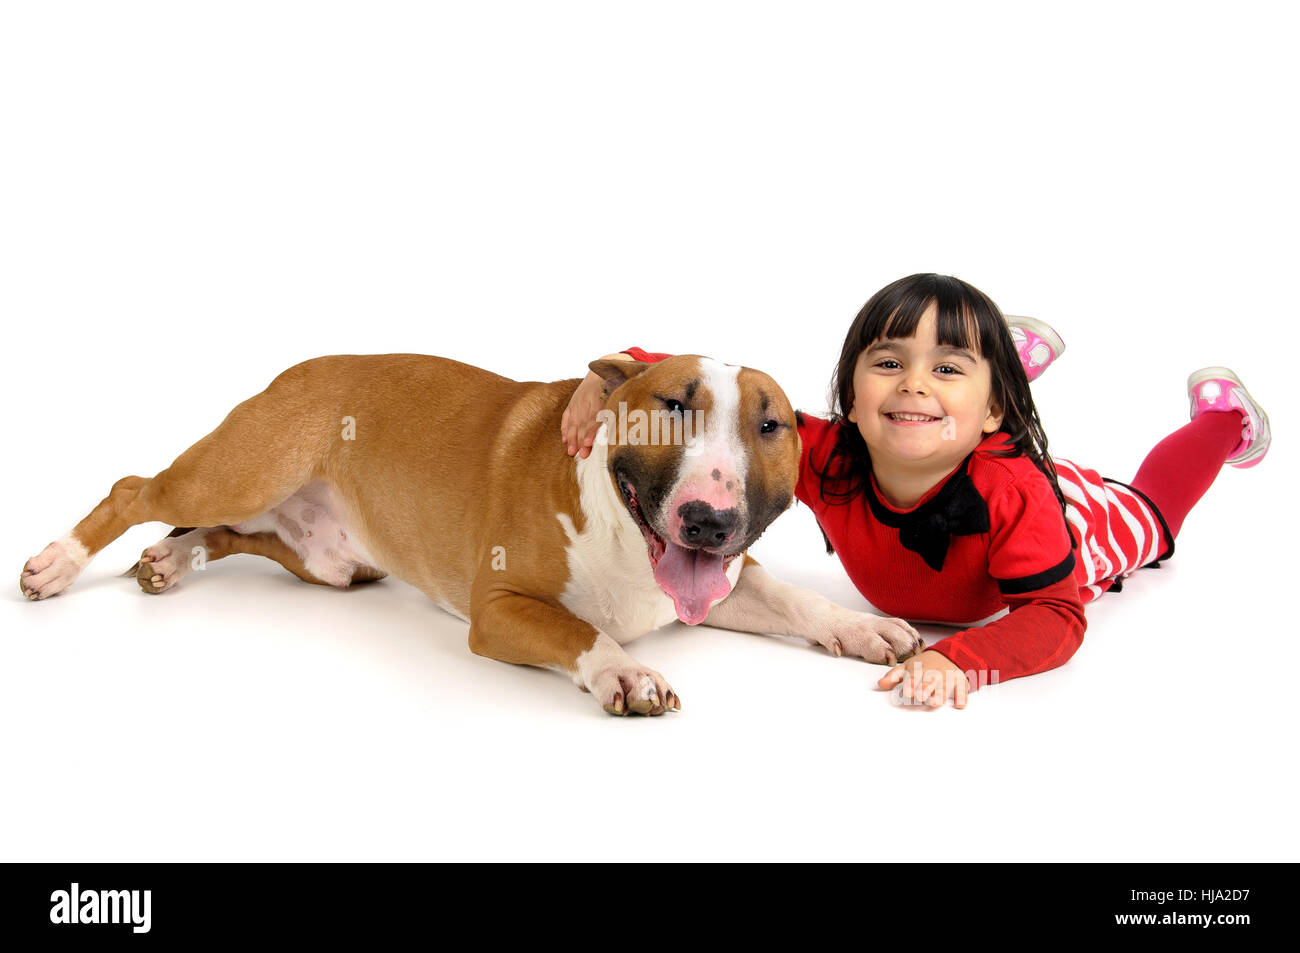 friendship, bull, dog, canine, child, girl, girls, children, kids, friendship, Stock Photo